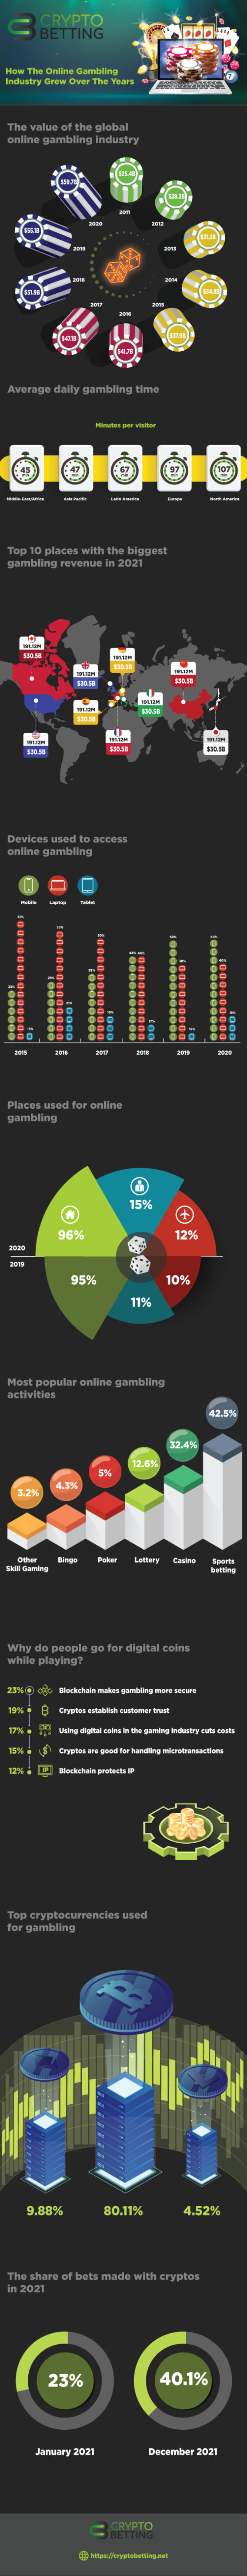 online gambling industry growth